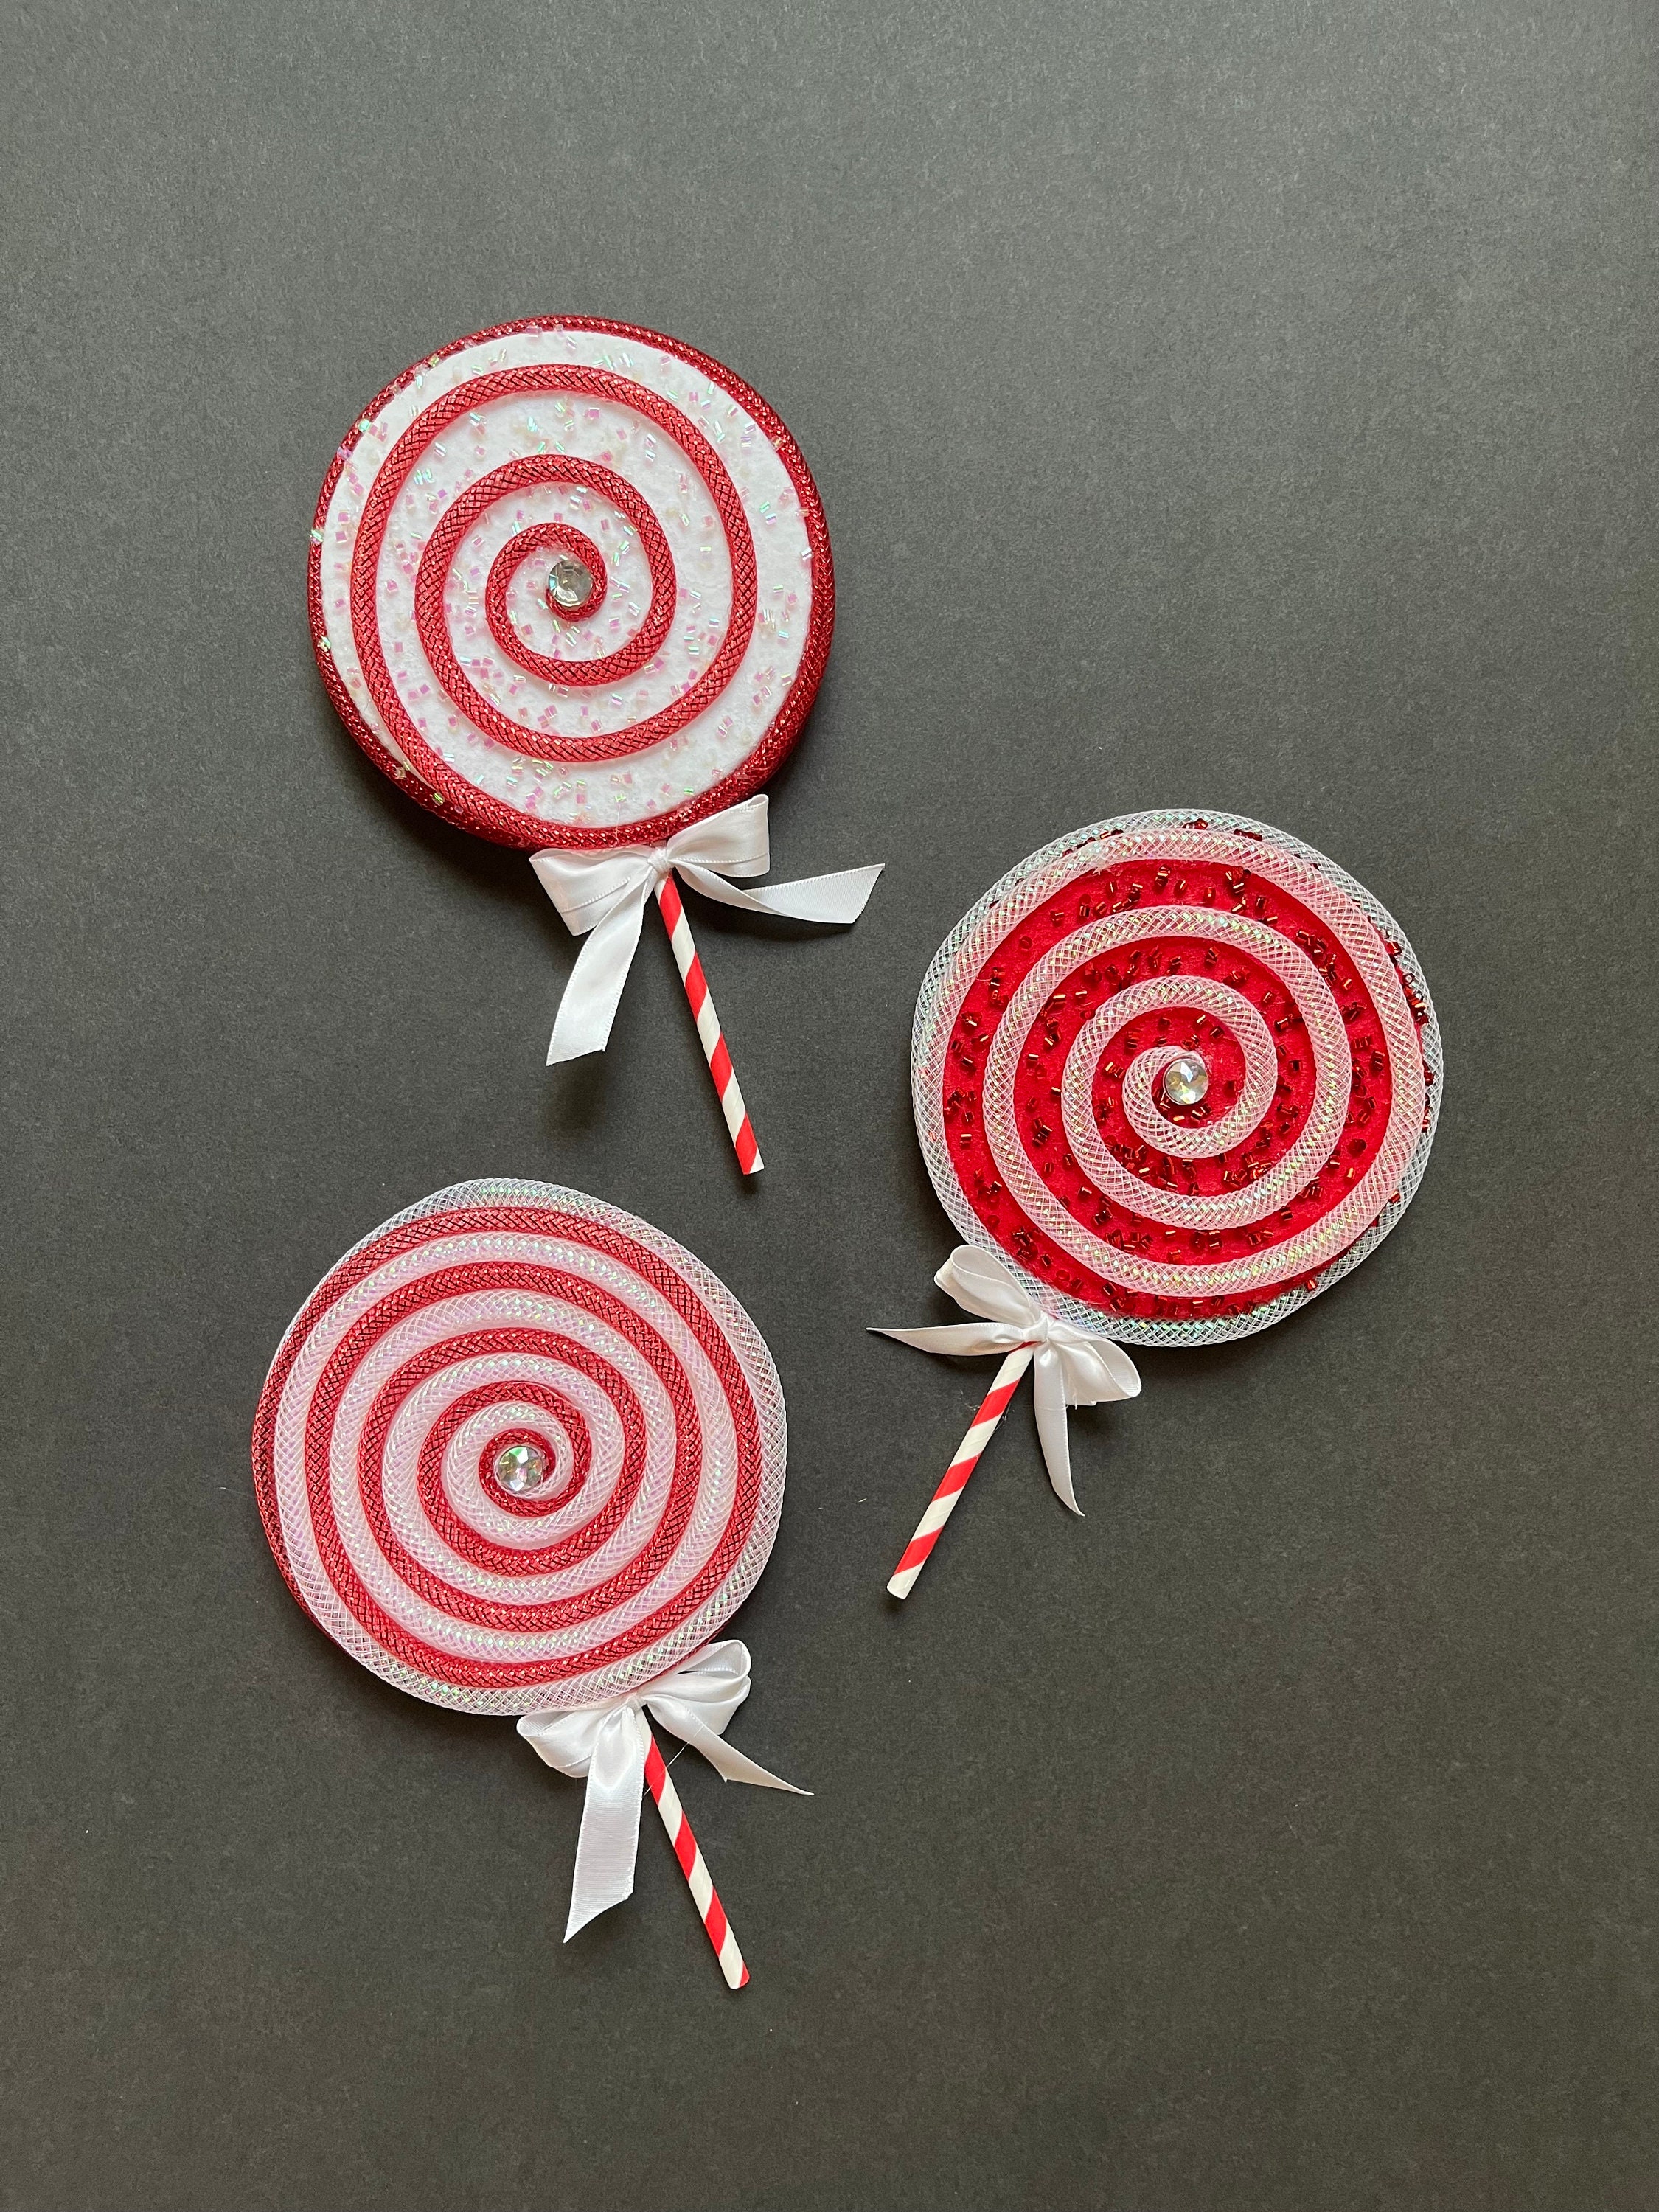 100pcs/set Round Wooden Lollipop Lolly Sticks 10cm Cake Dowels for